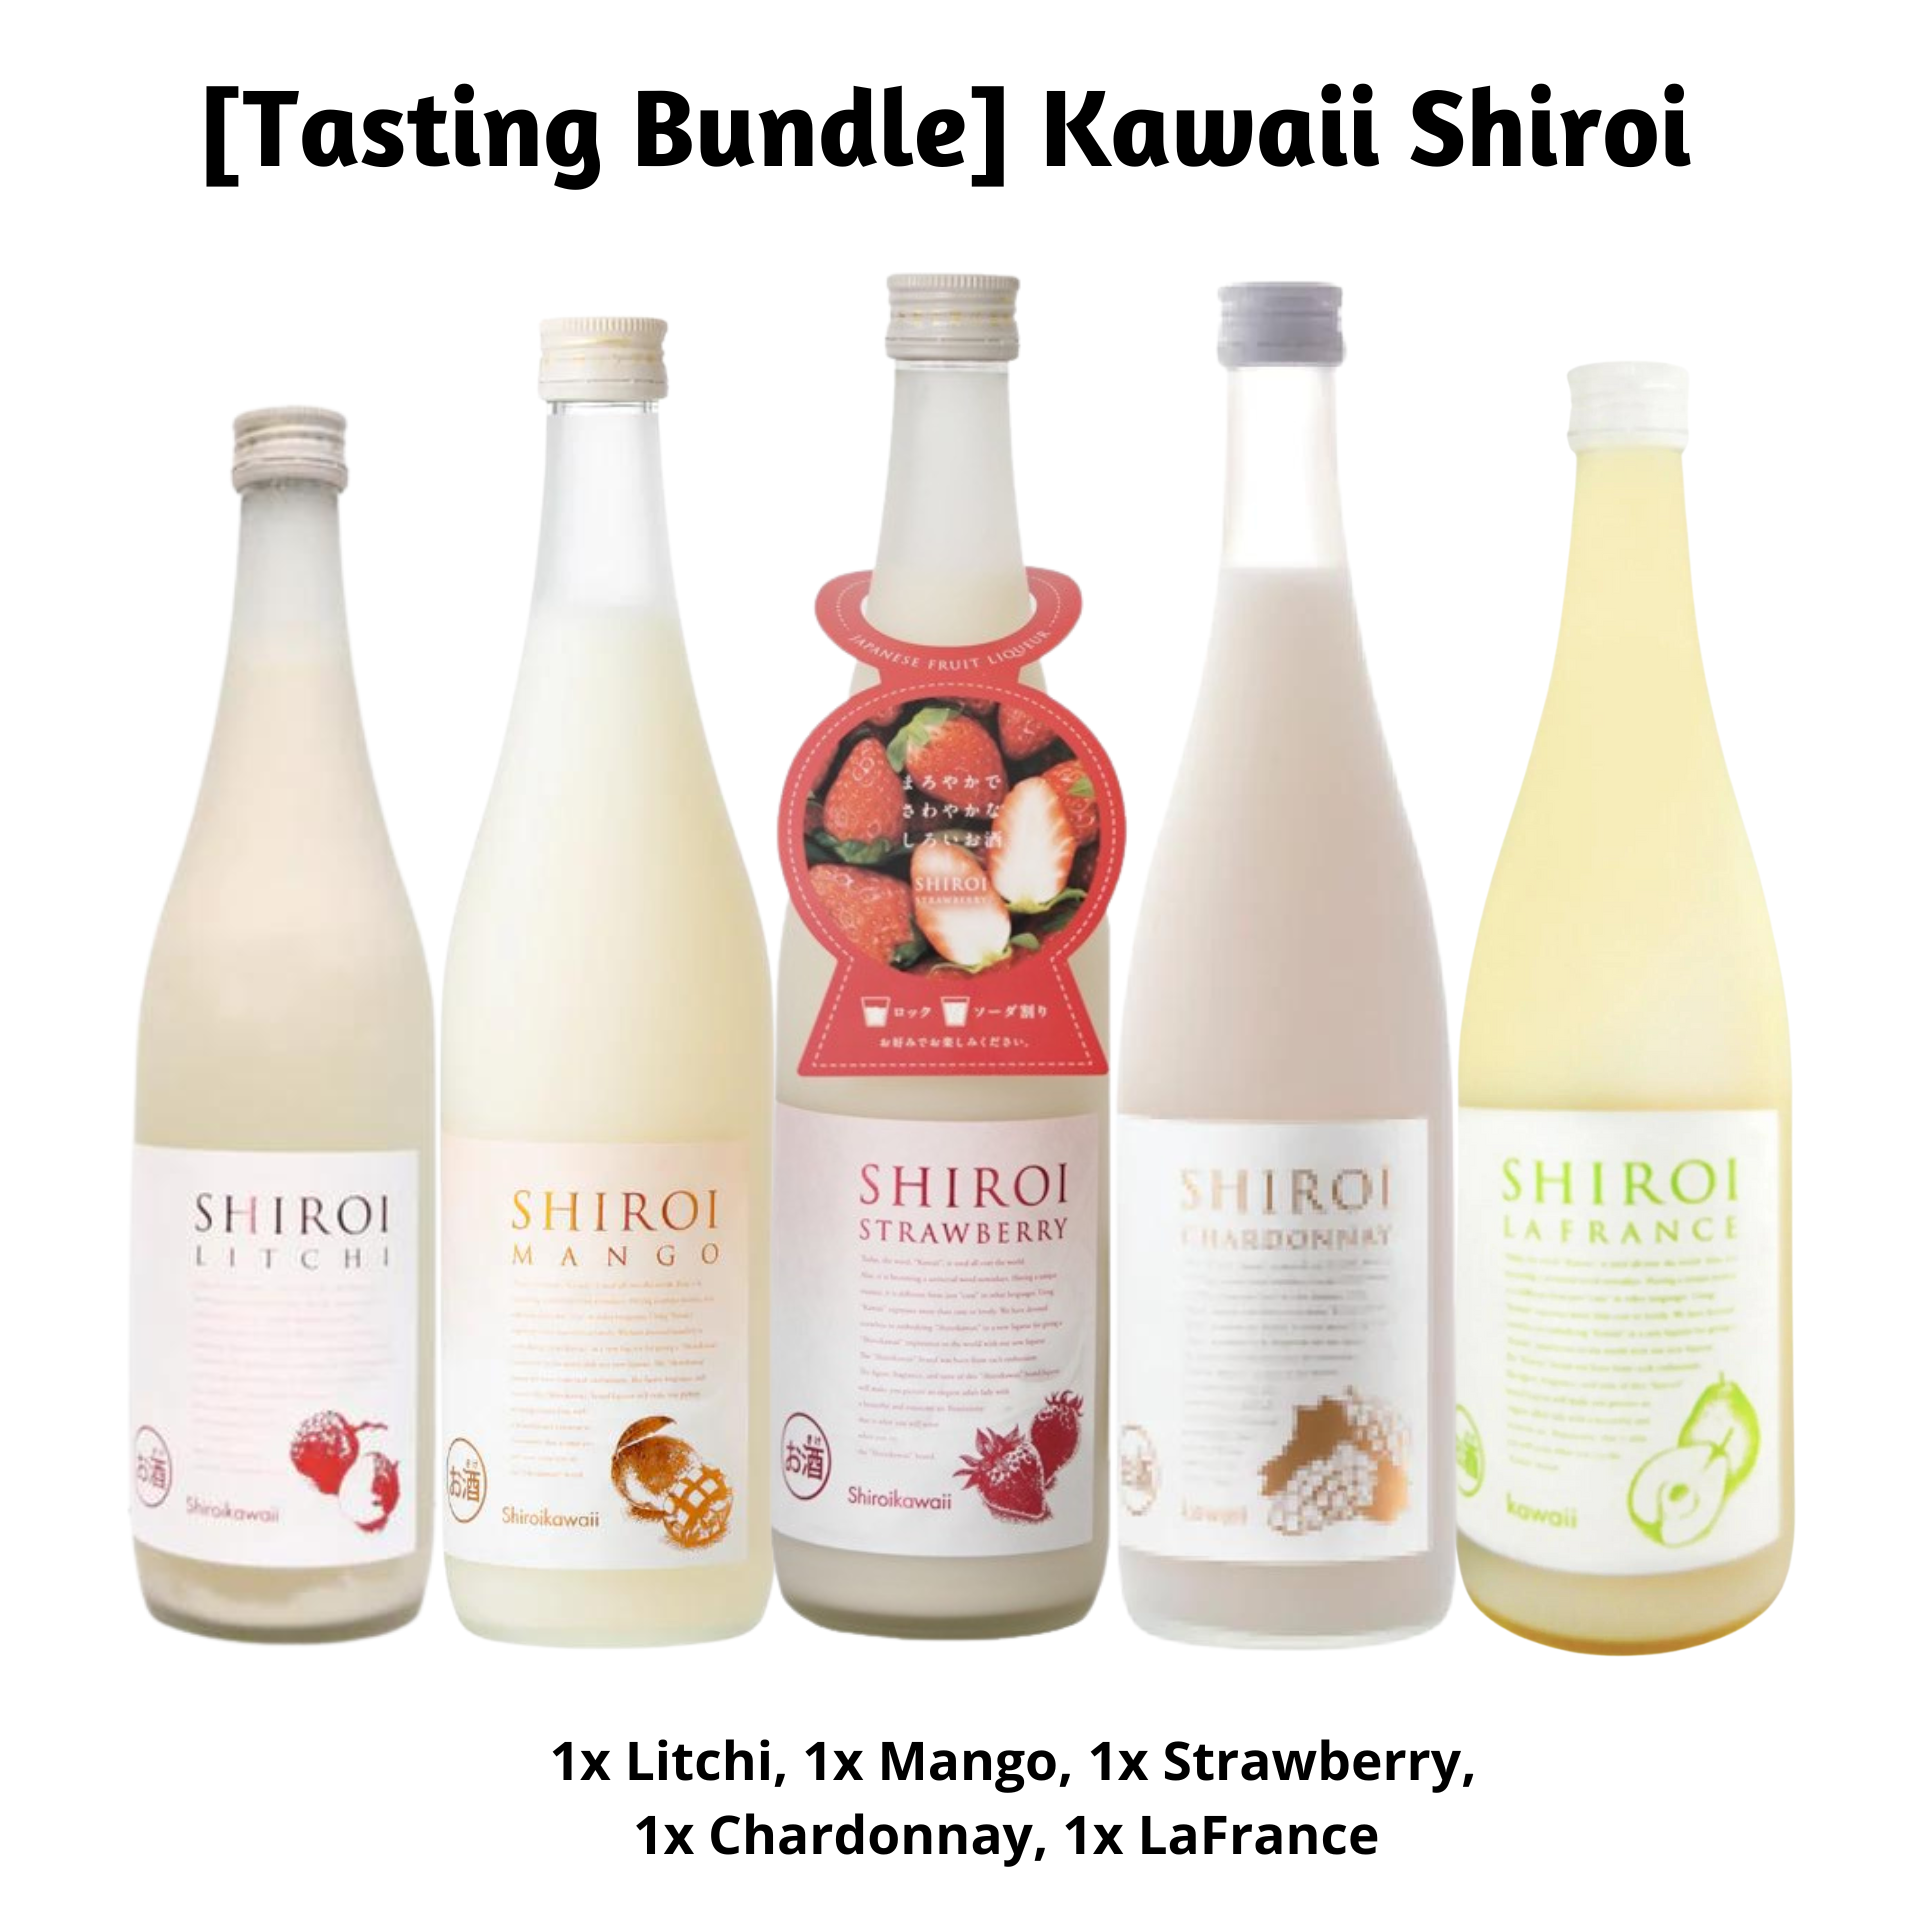 [Tasting Bundle] Kawaii Shiroi - Litchi, Chardonnay, LaFrance, Strawberry and Mango